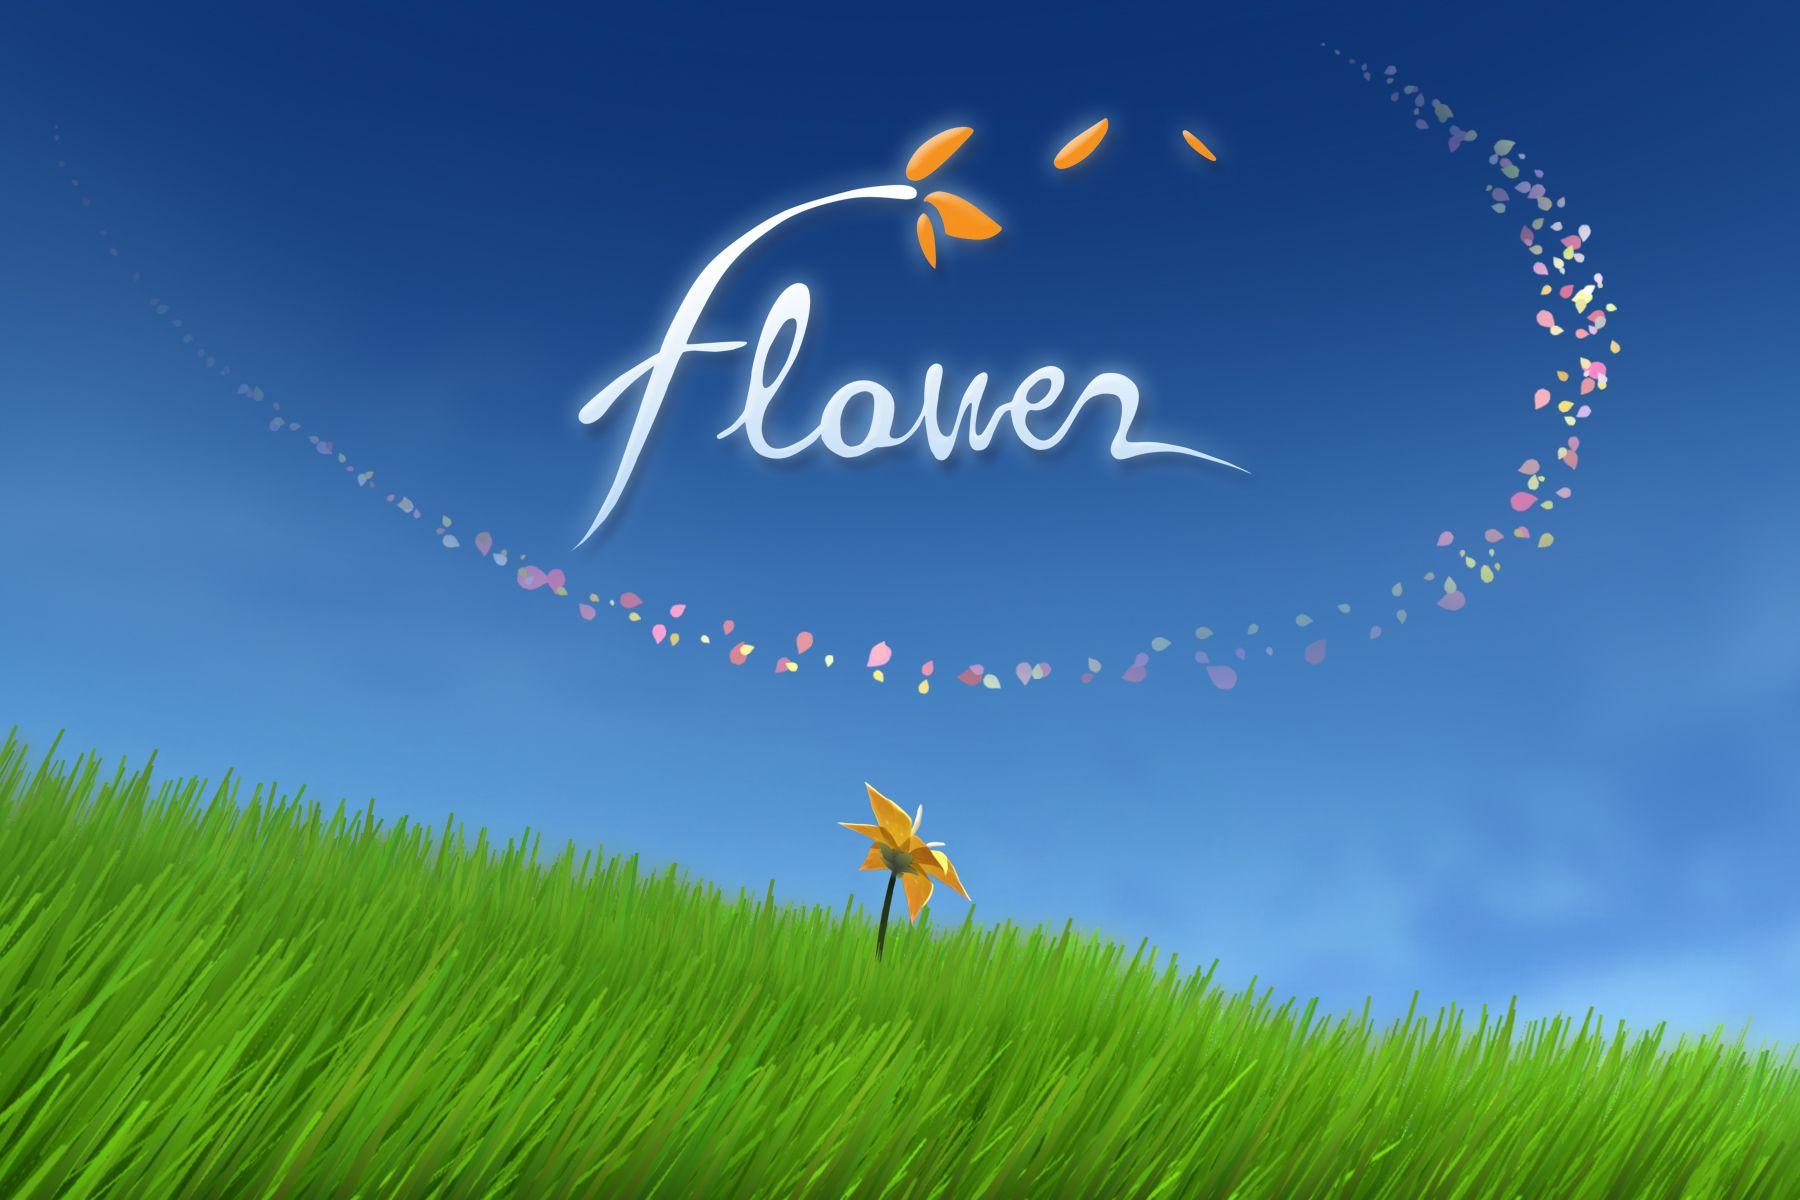 Flower Bound for PS Vita?